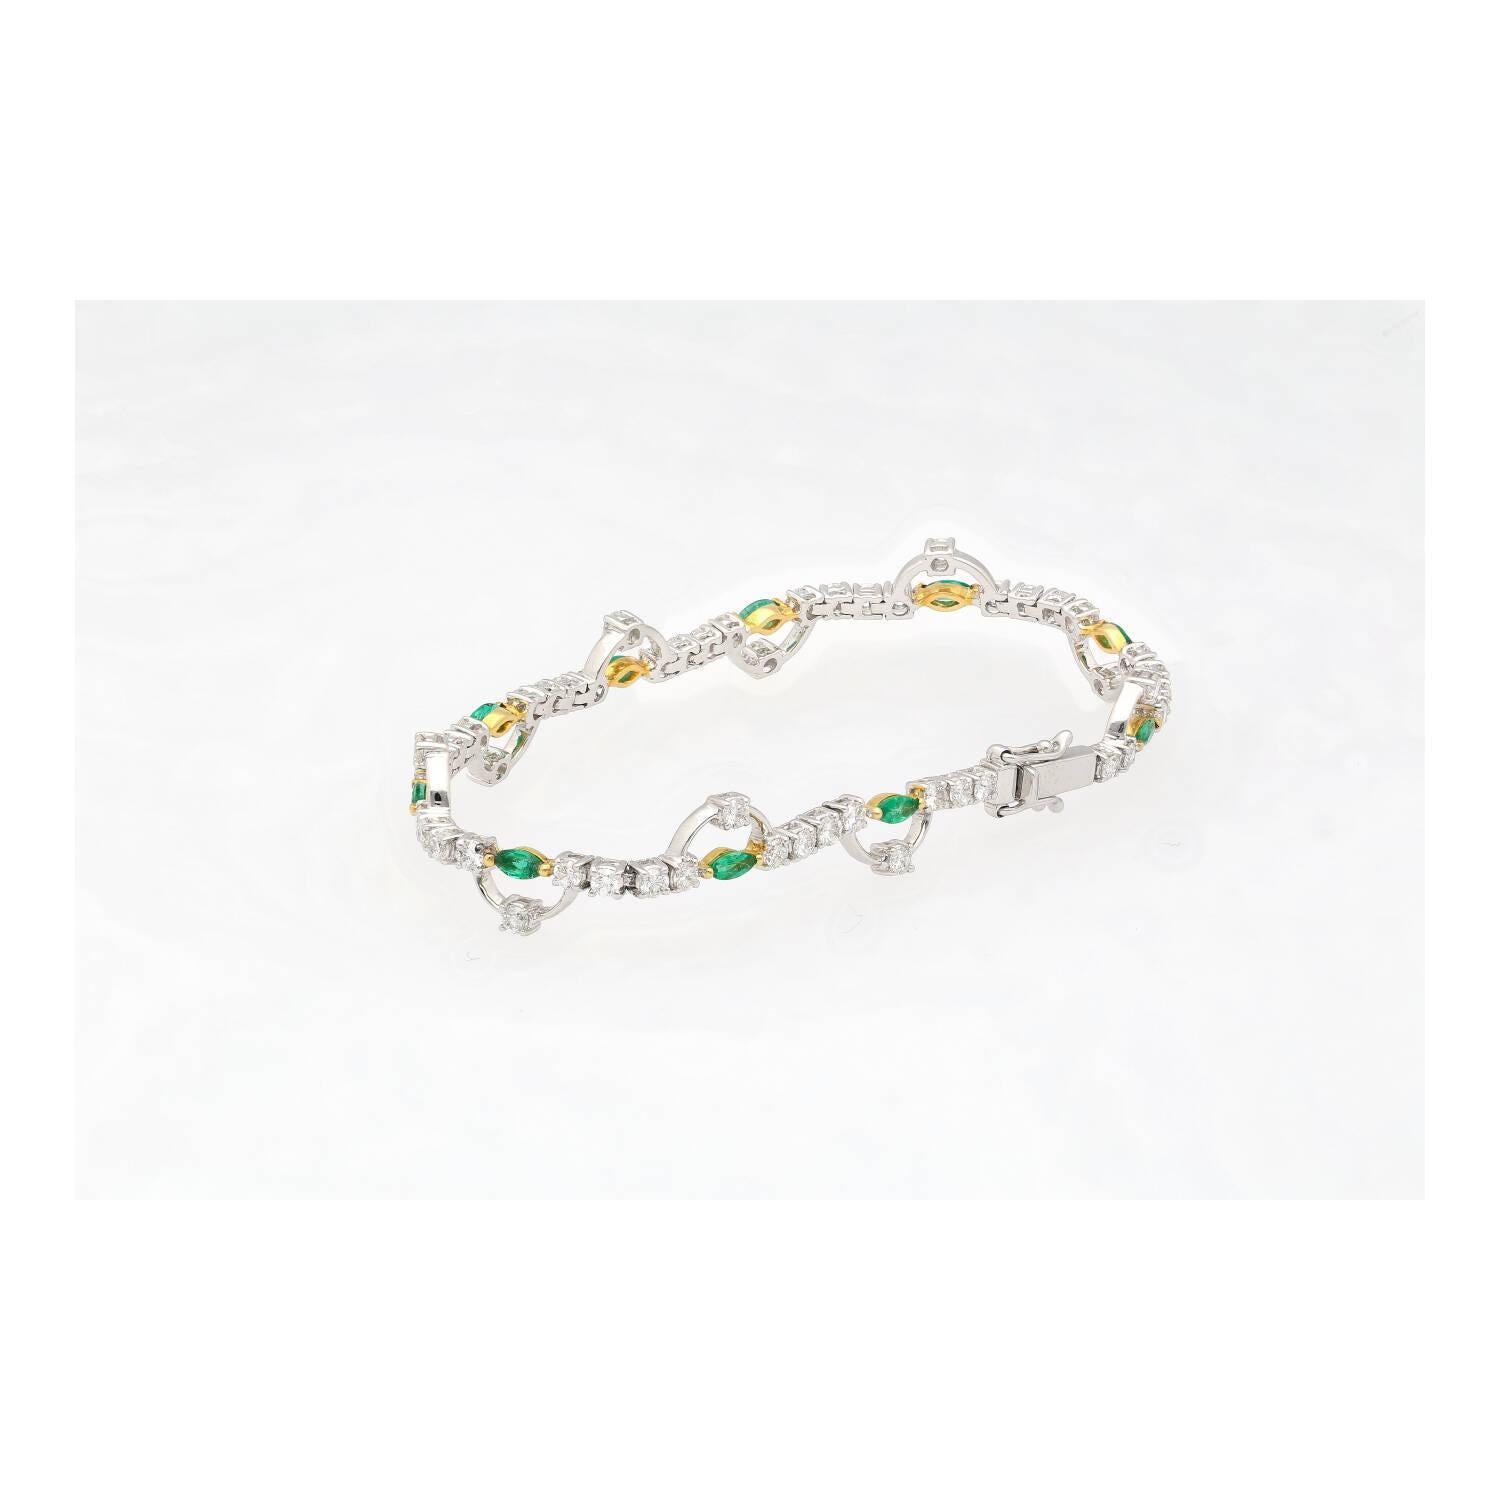 Natural 0.72 Carat Emerald & 2.08 Carat Diamond Charm Bracelet in 18K Gold In New Condition For Sale In Miami, FL